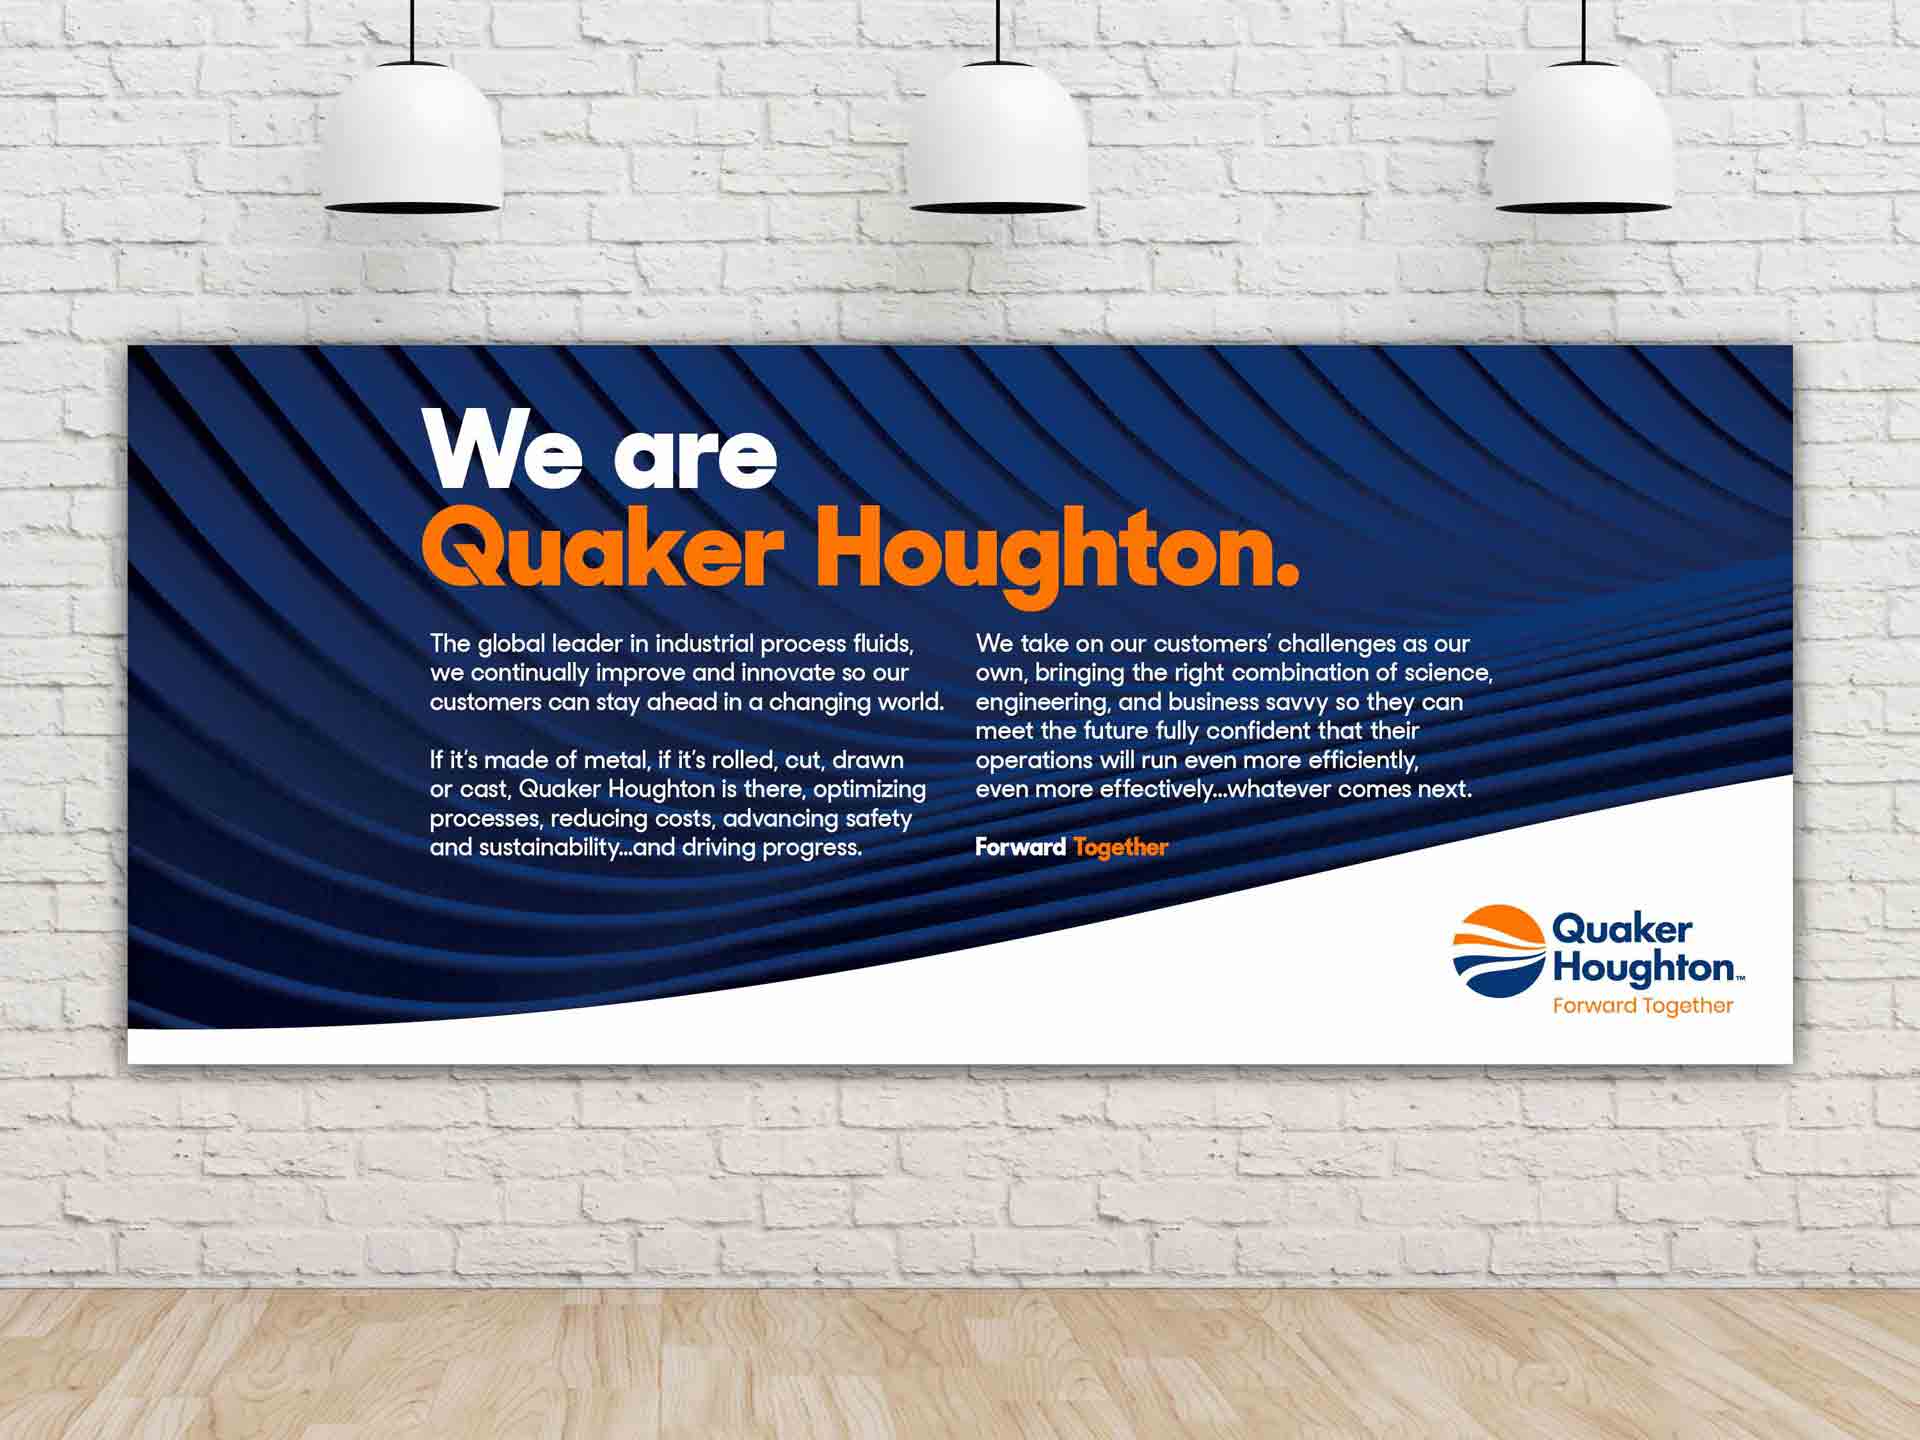 Quaker Houghton advertisement